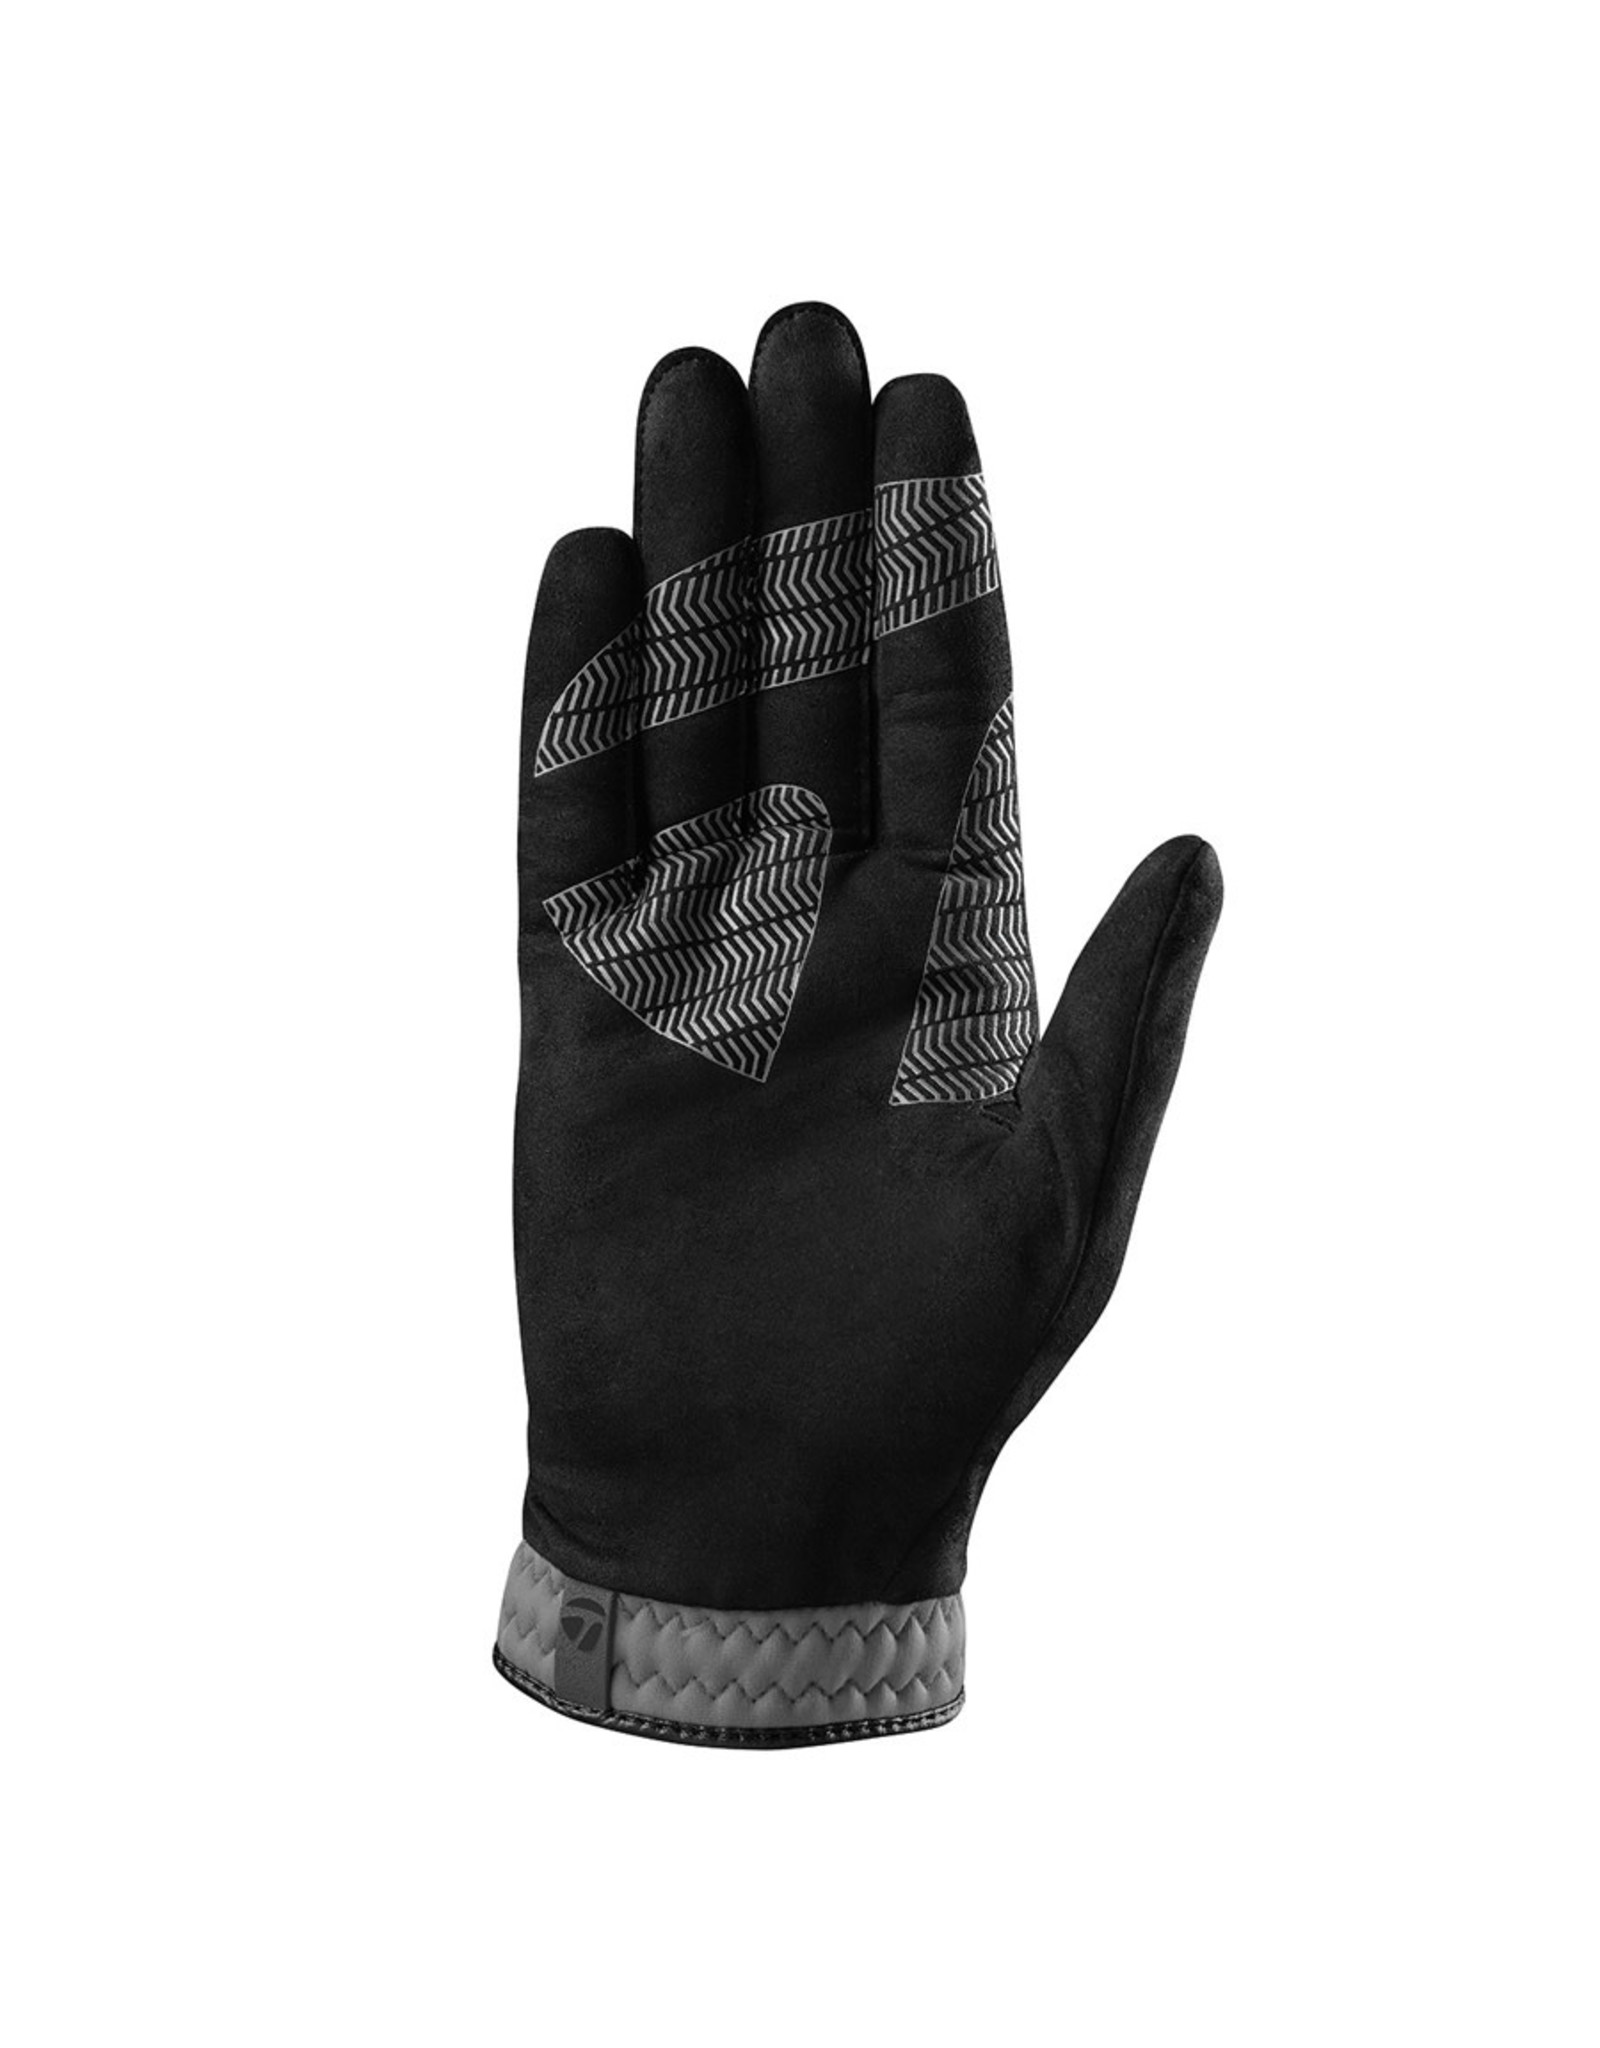 TaylorMade Rain Gloves